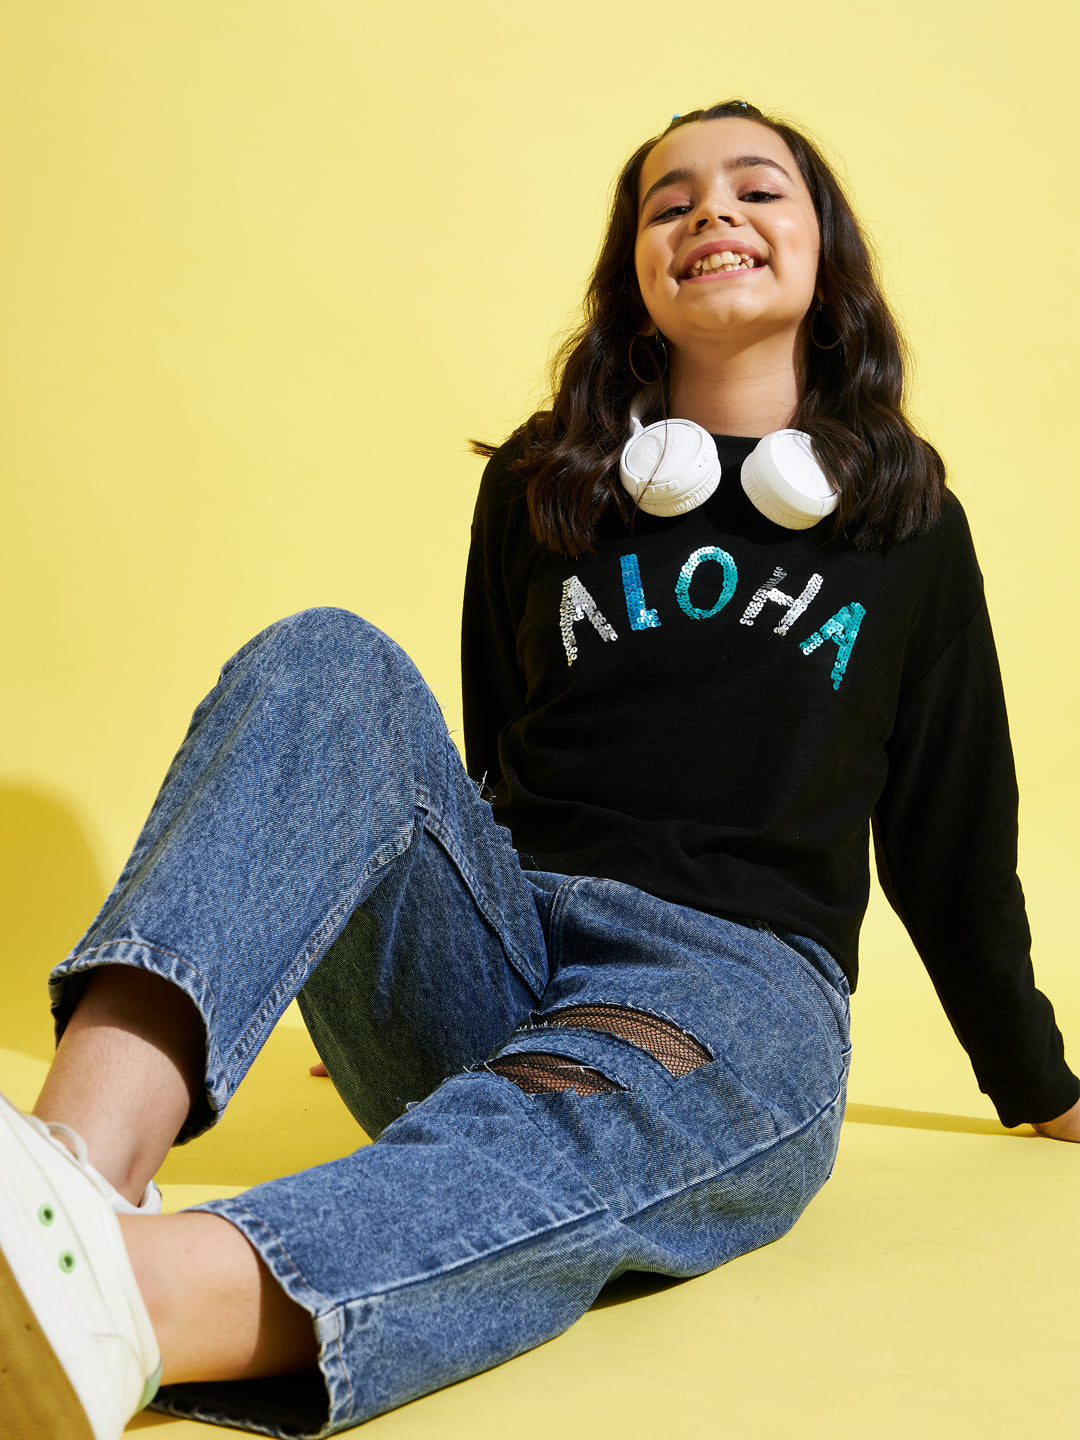 Girls Black Aloha Embroidered Sweatshirt - Lyush Kids